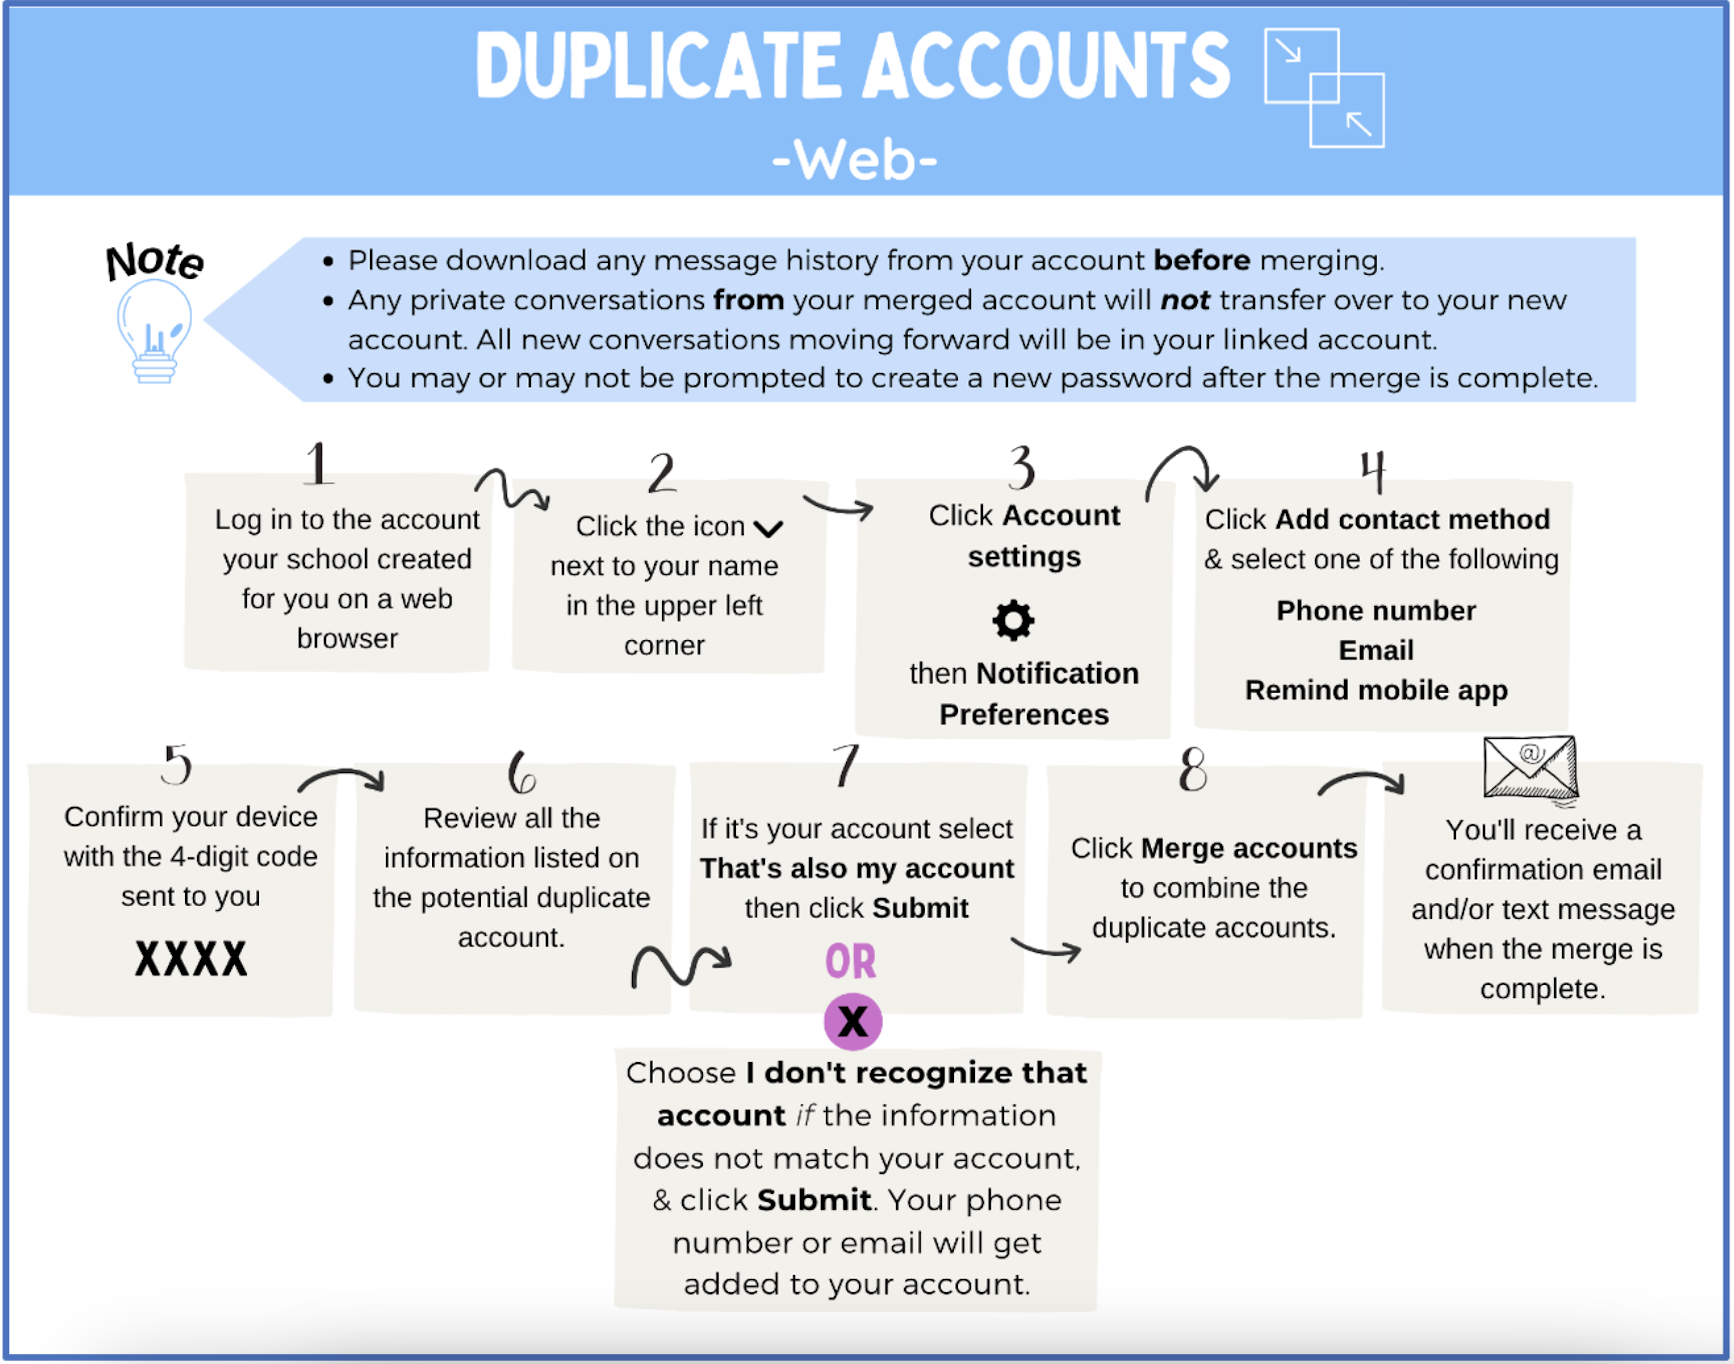 duplicate accounts -web.png